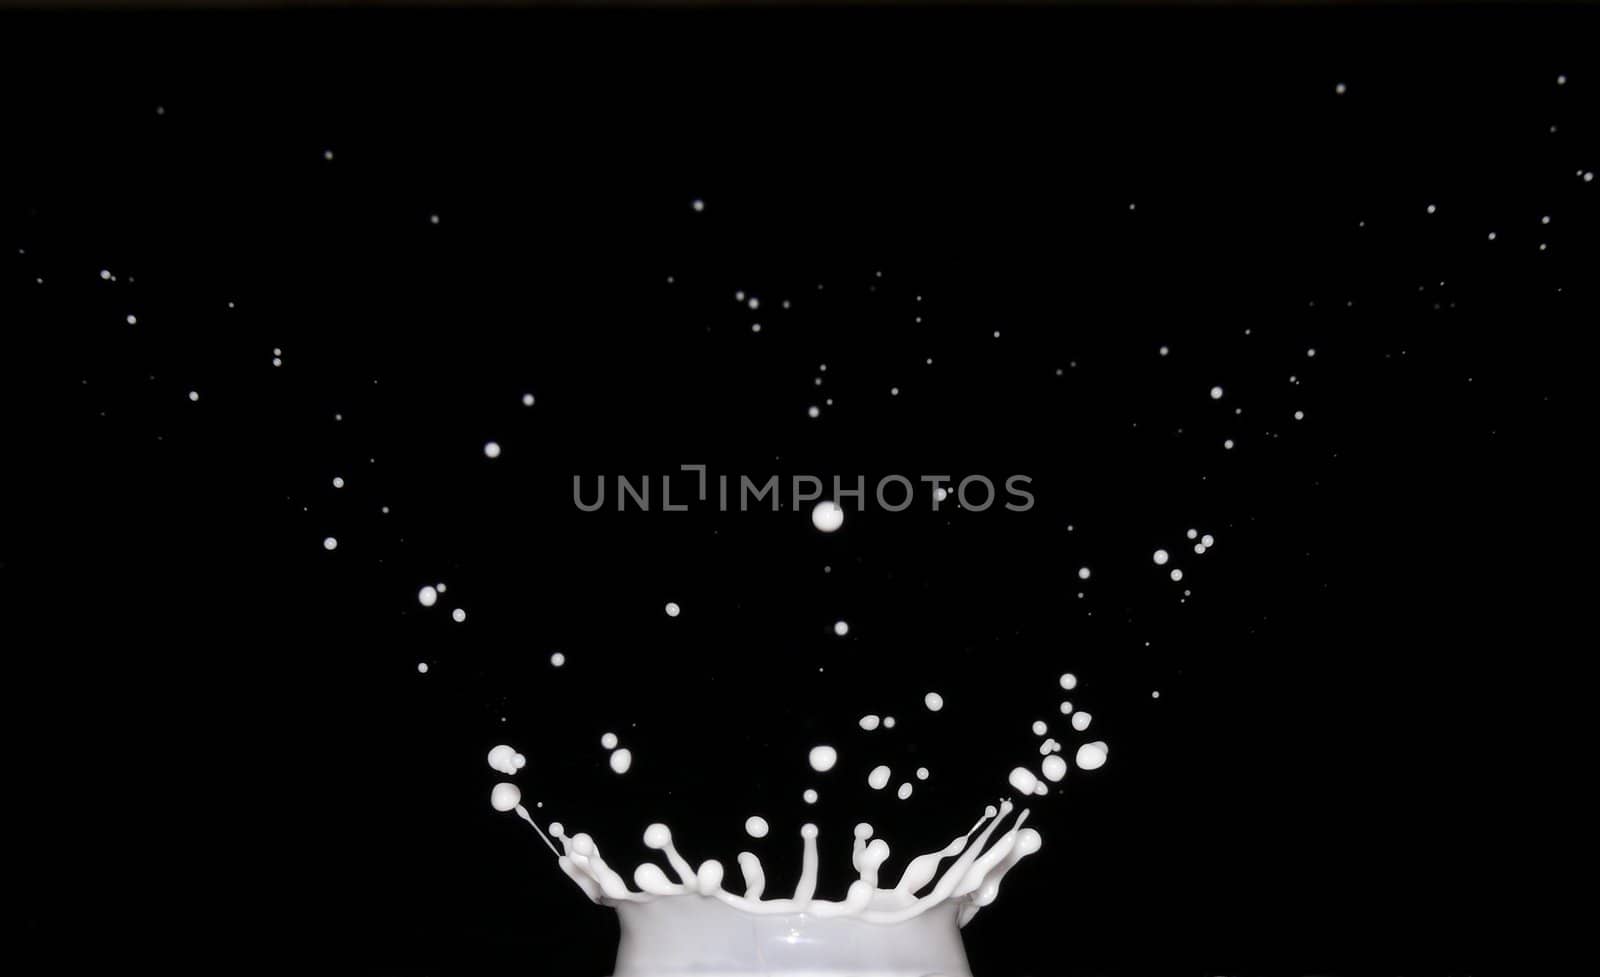 Crown-shaped splash of milk on black background